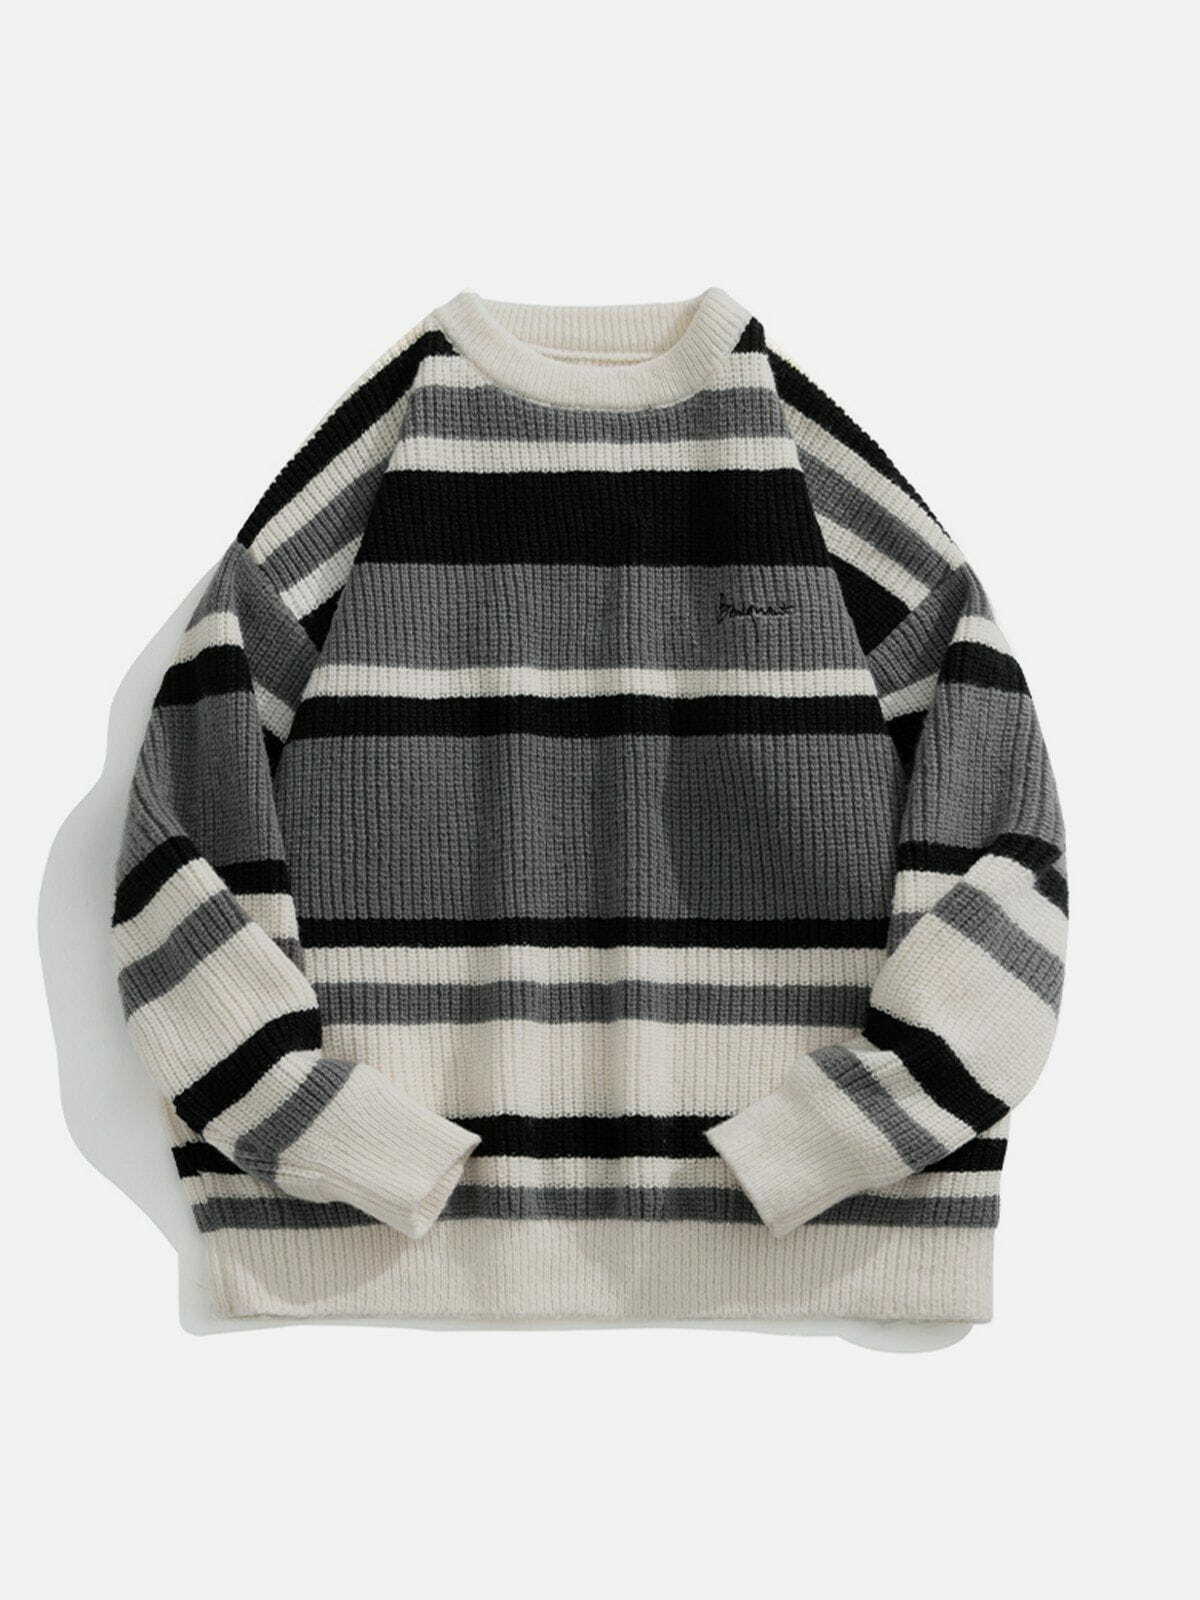 color block striped sweater edgy retro y2k fashion 2890